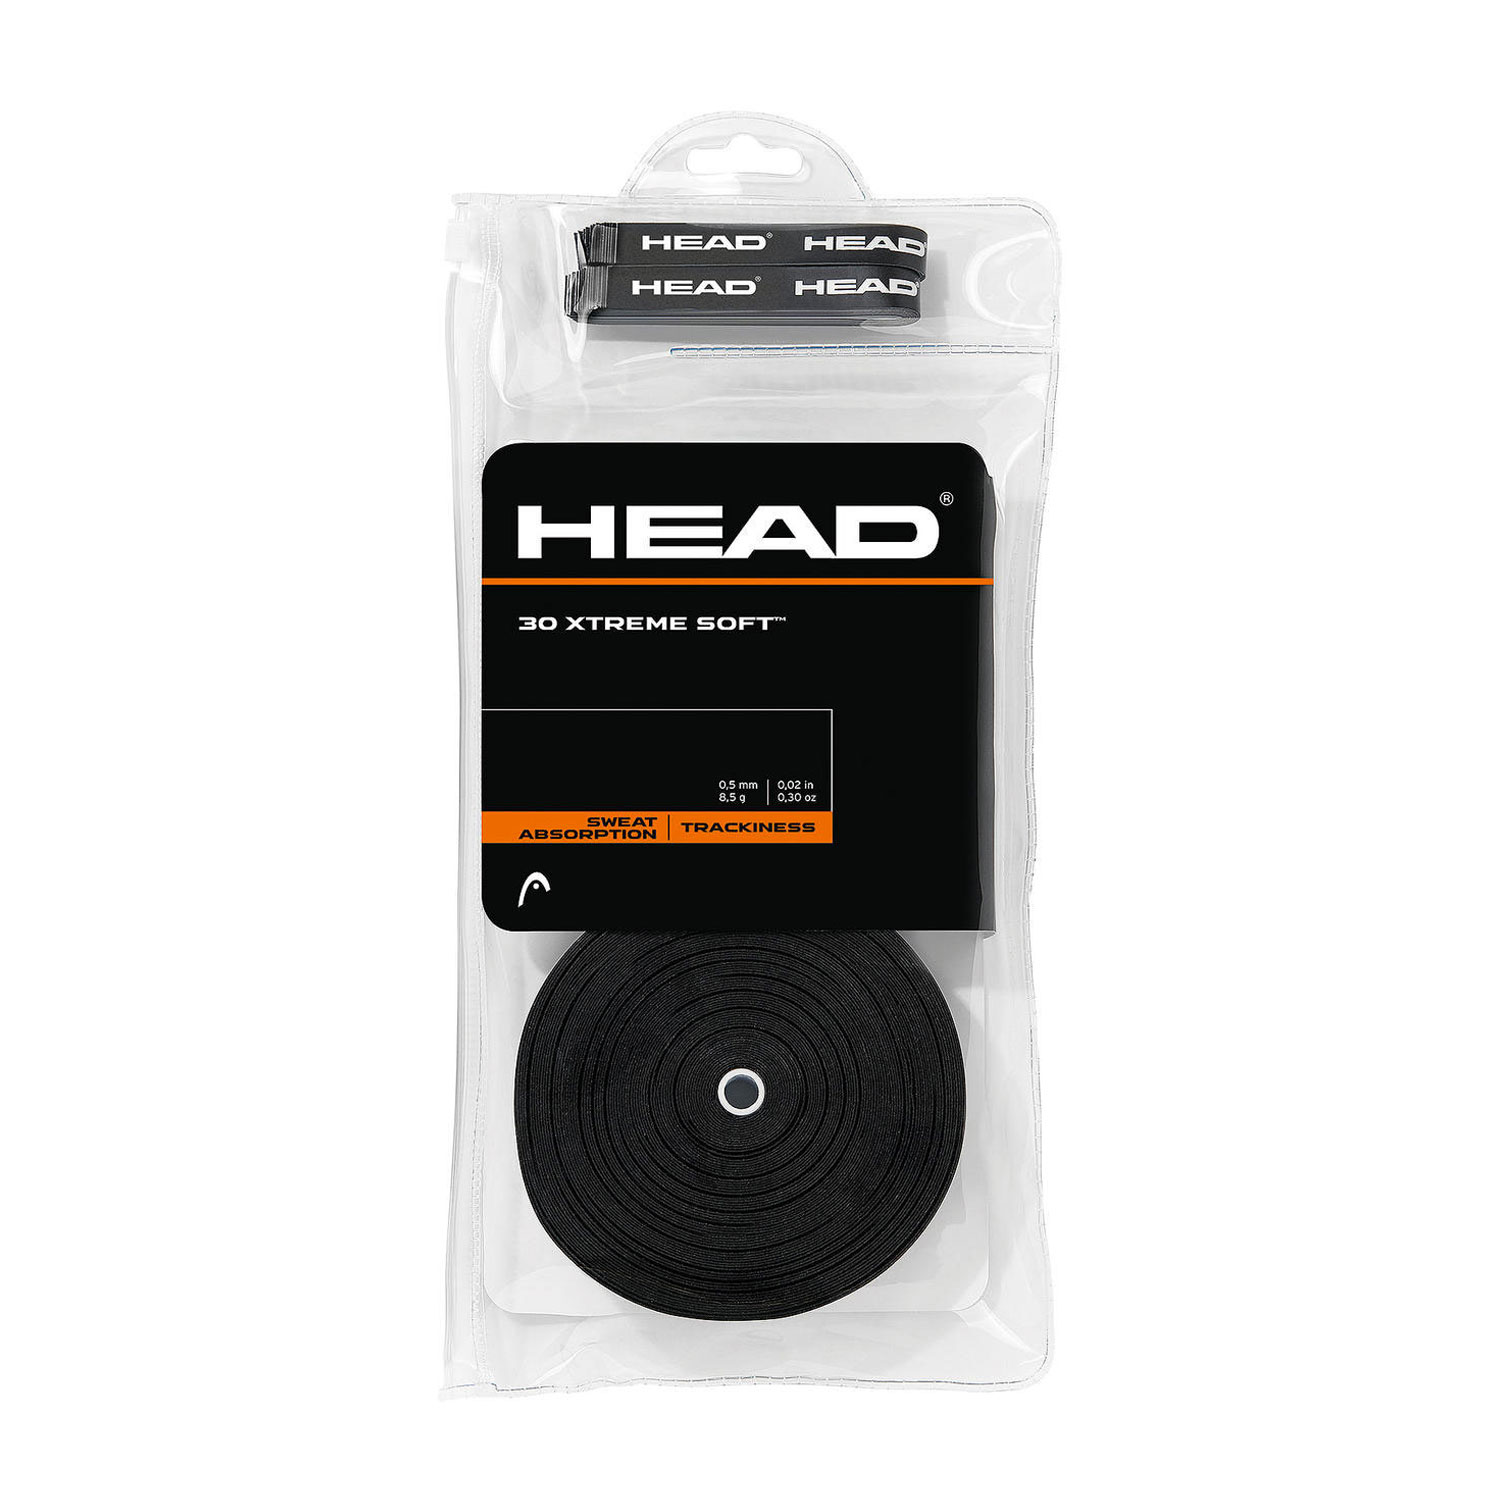 Head Xtreme Soft x 30 Overgrip - Black